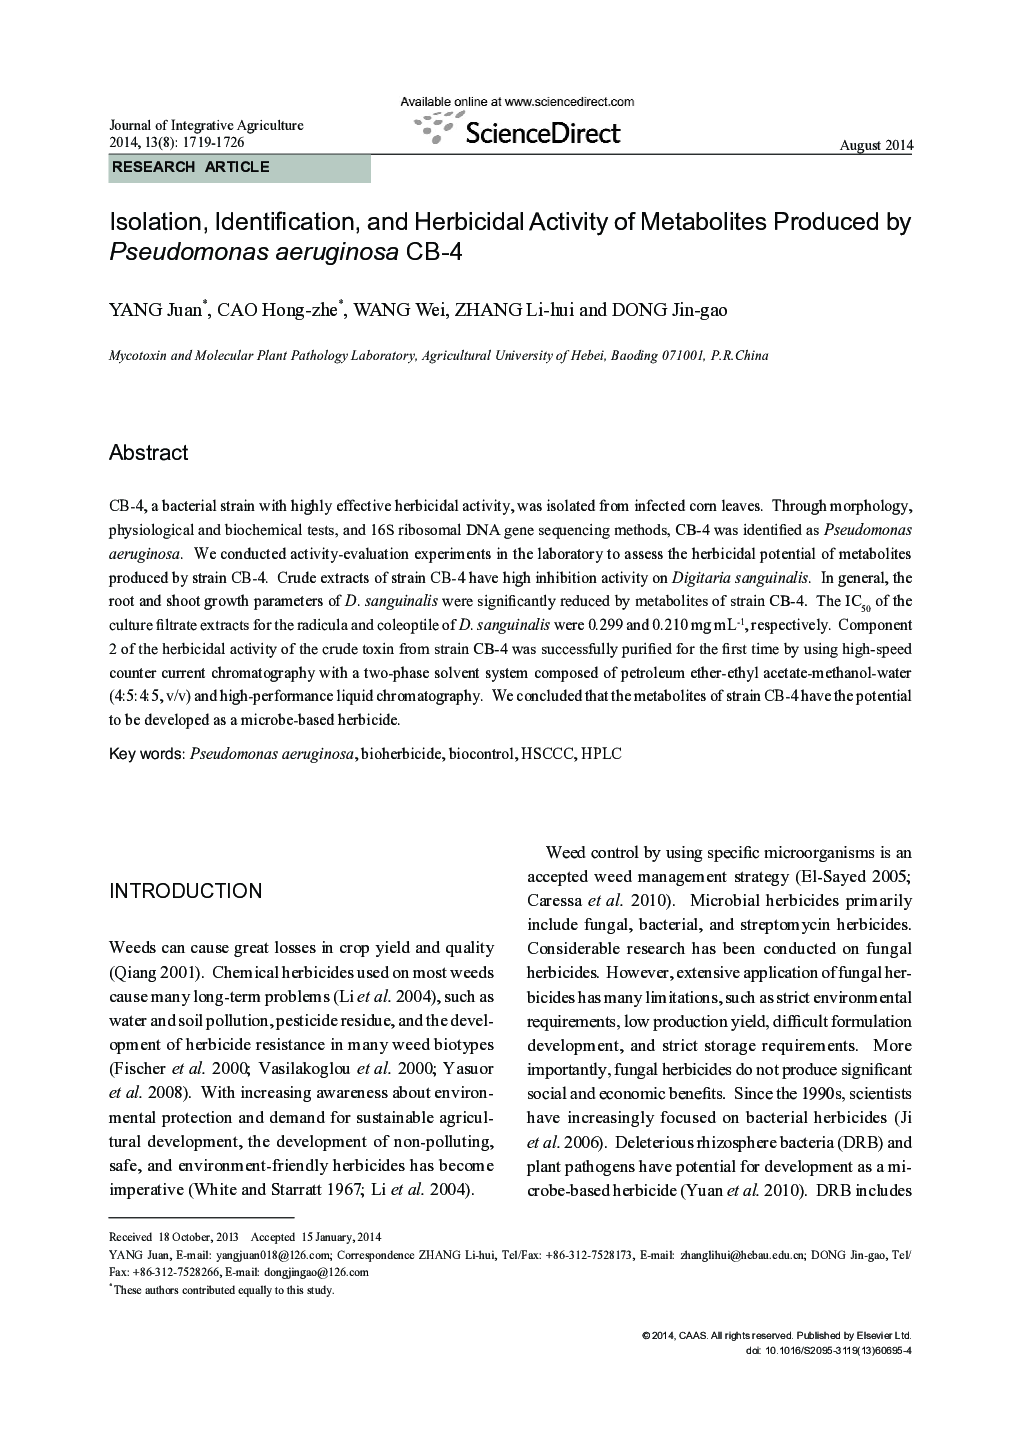 Isolation, Identification, and Herbicidal Activity of Metabolites Produced by Pseudomonas aeruginosa CB-4